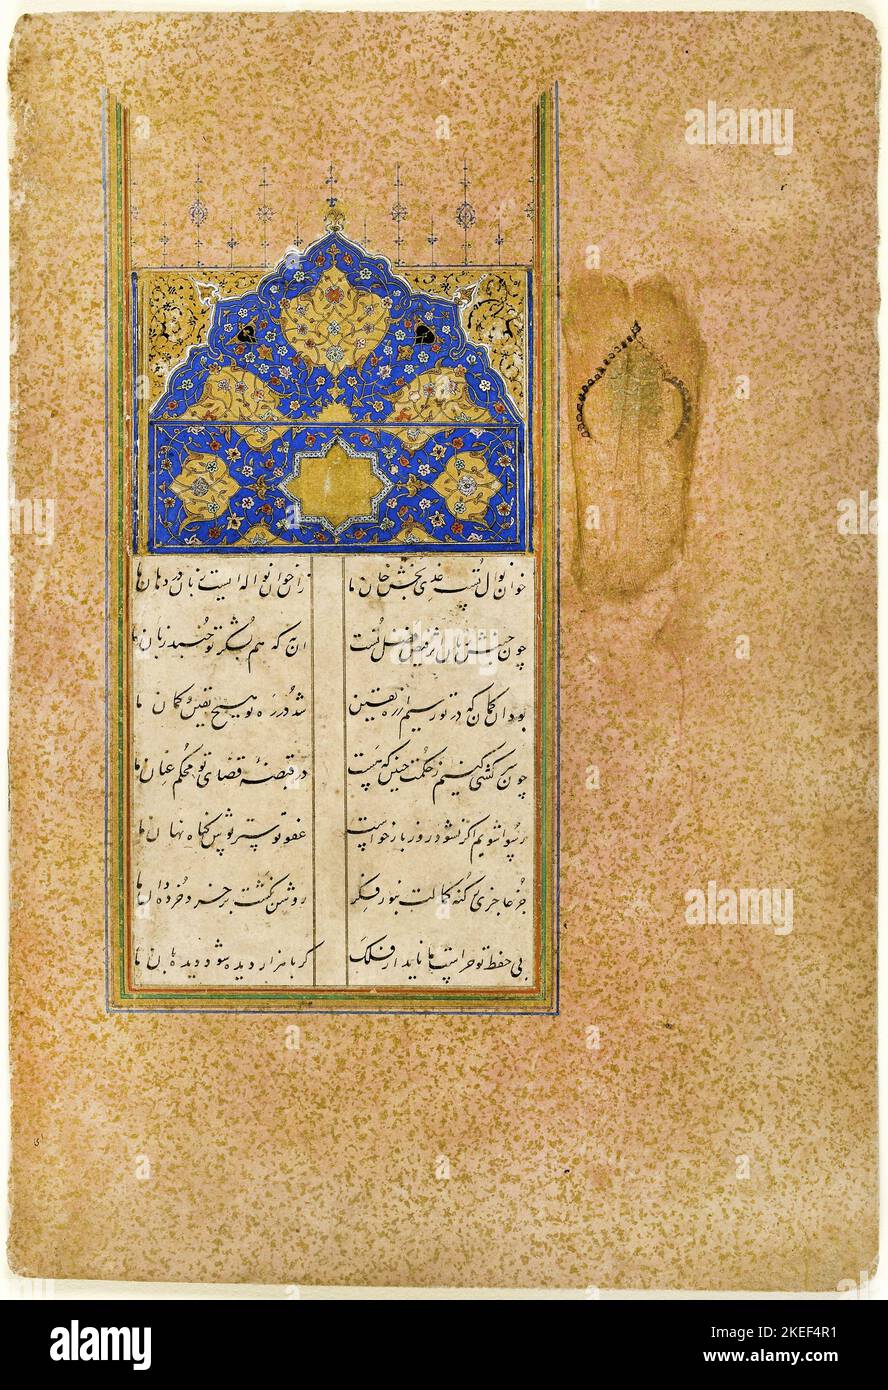 Sultan Ali B. Muhammad al-Mashhadi, Divan Collected Poems by Suhayli; 16. Century, Arthur M. Sackler Gallery, Washington, D.C., USA. Stockfoto